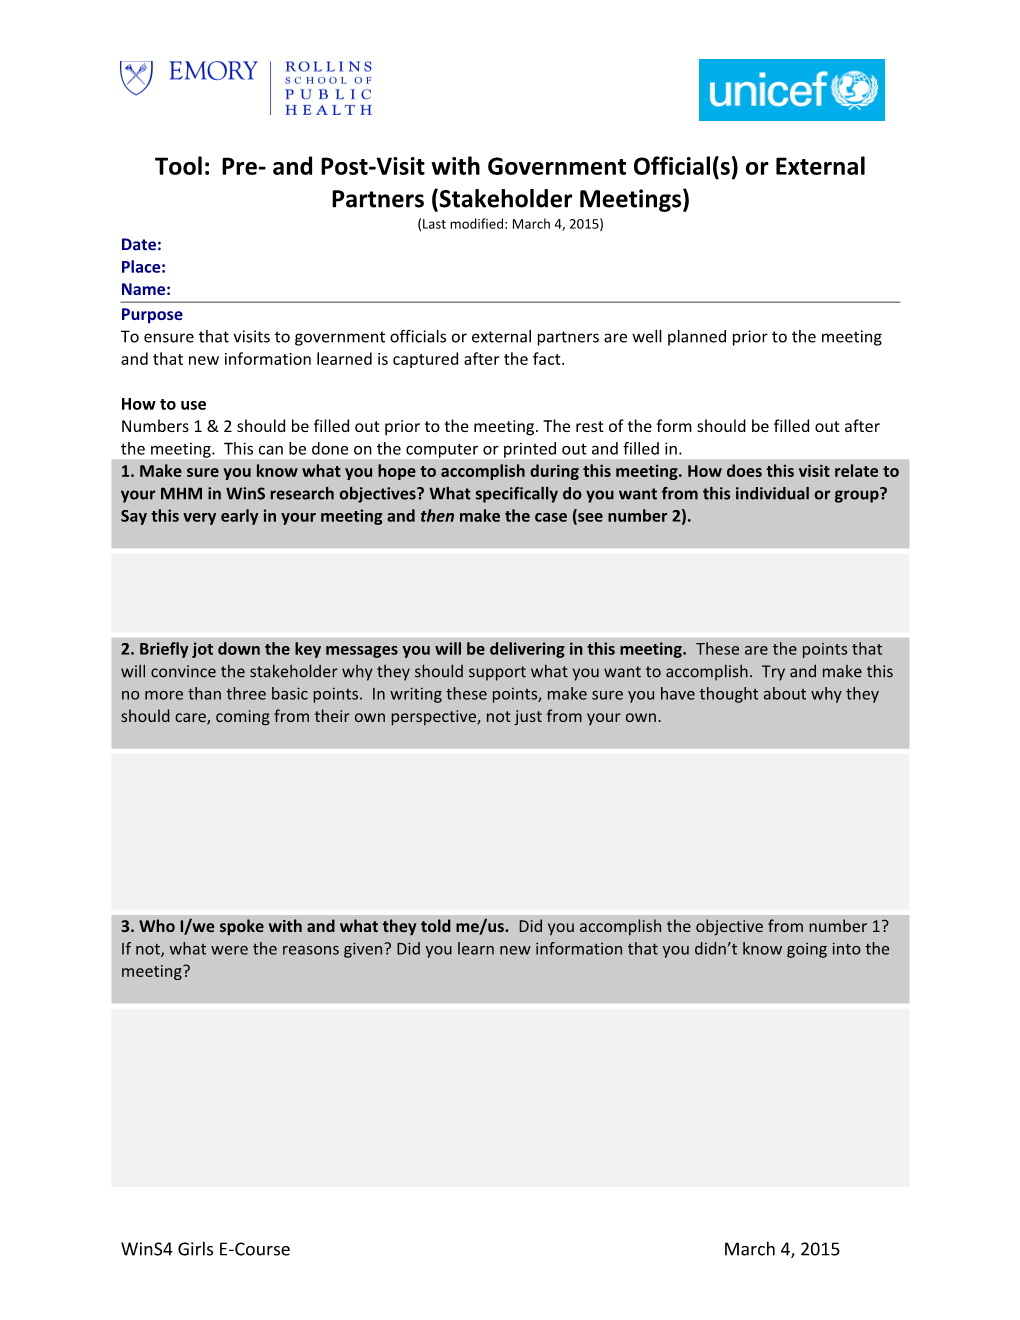 Overnment Official - External Partner Meeting Report Template